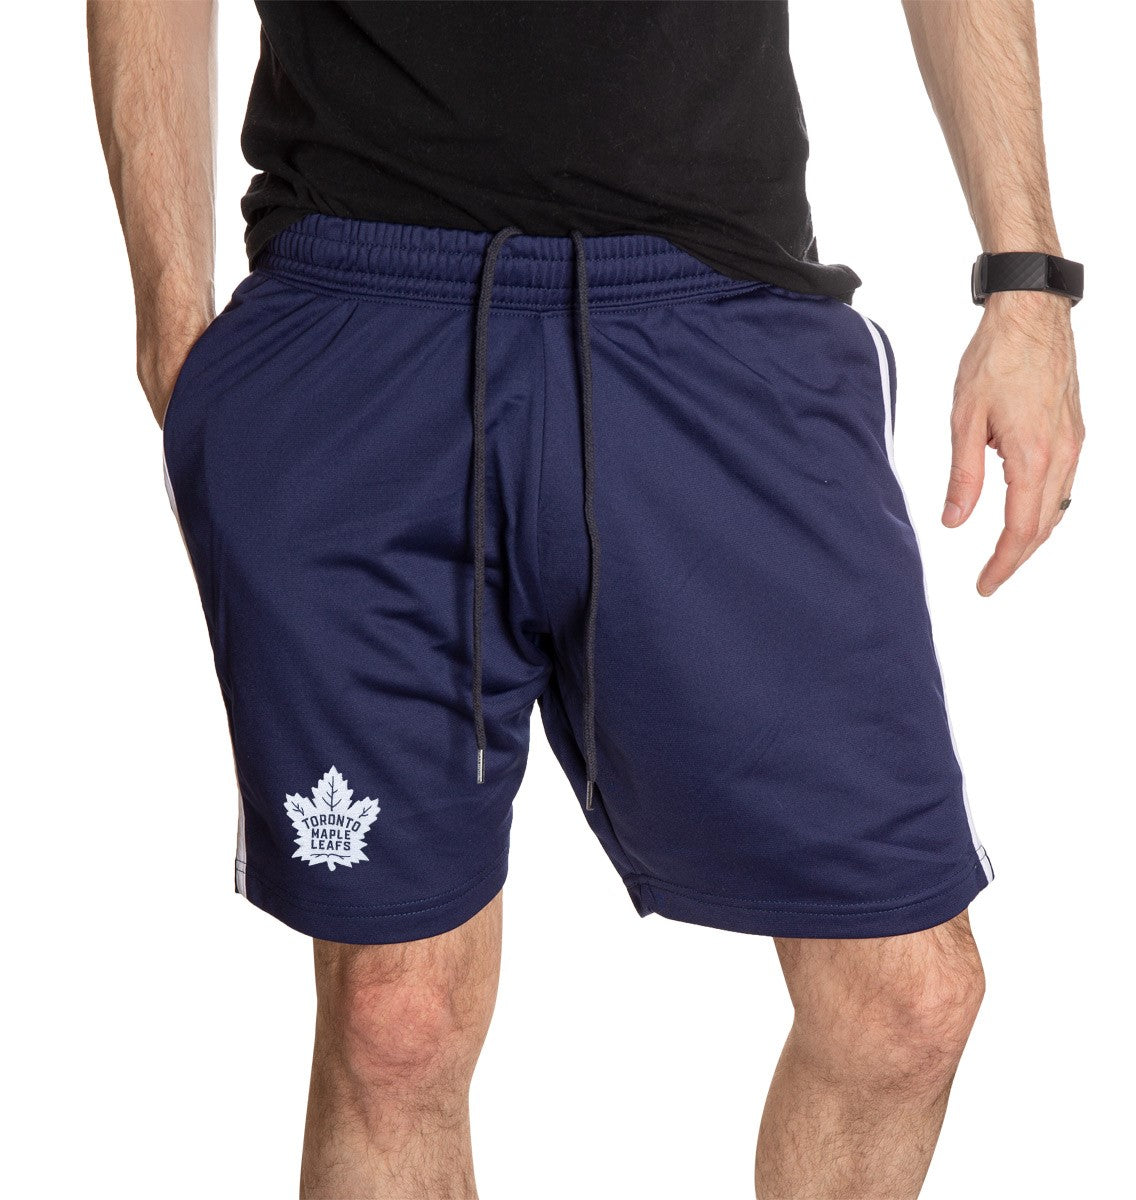 Toronto Maple Leafs Two-Stripe Shorts for Men